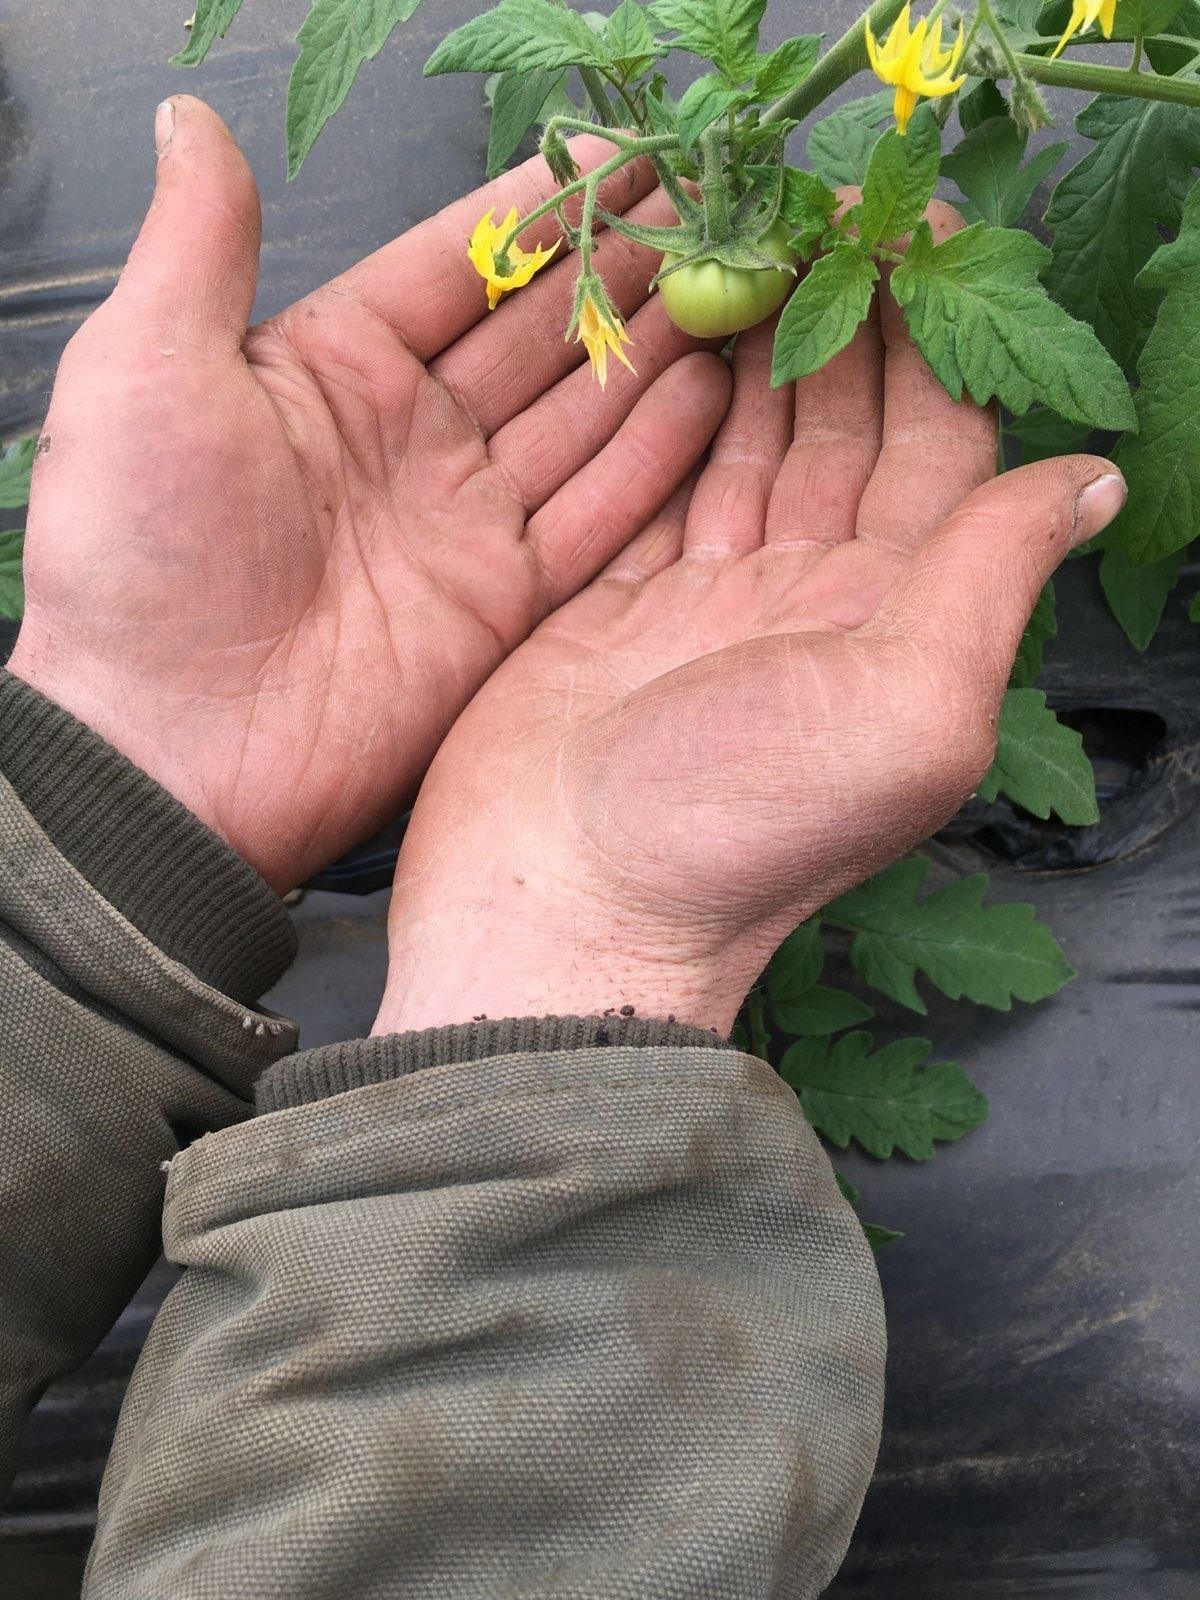 New tomato growth